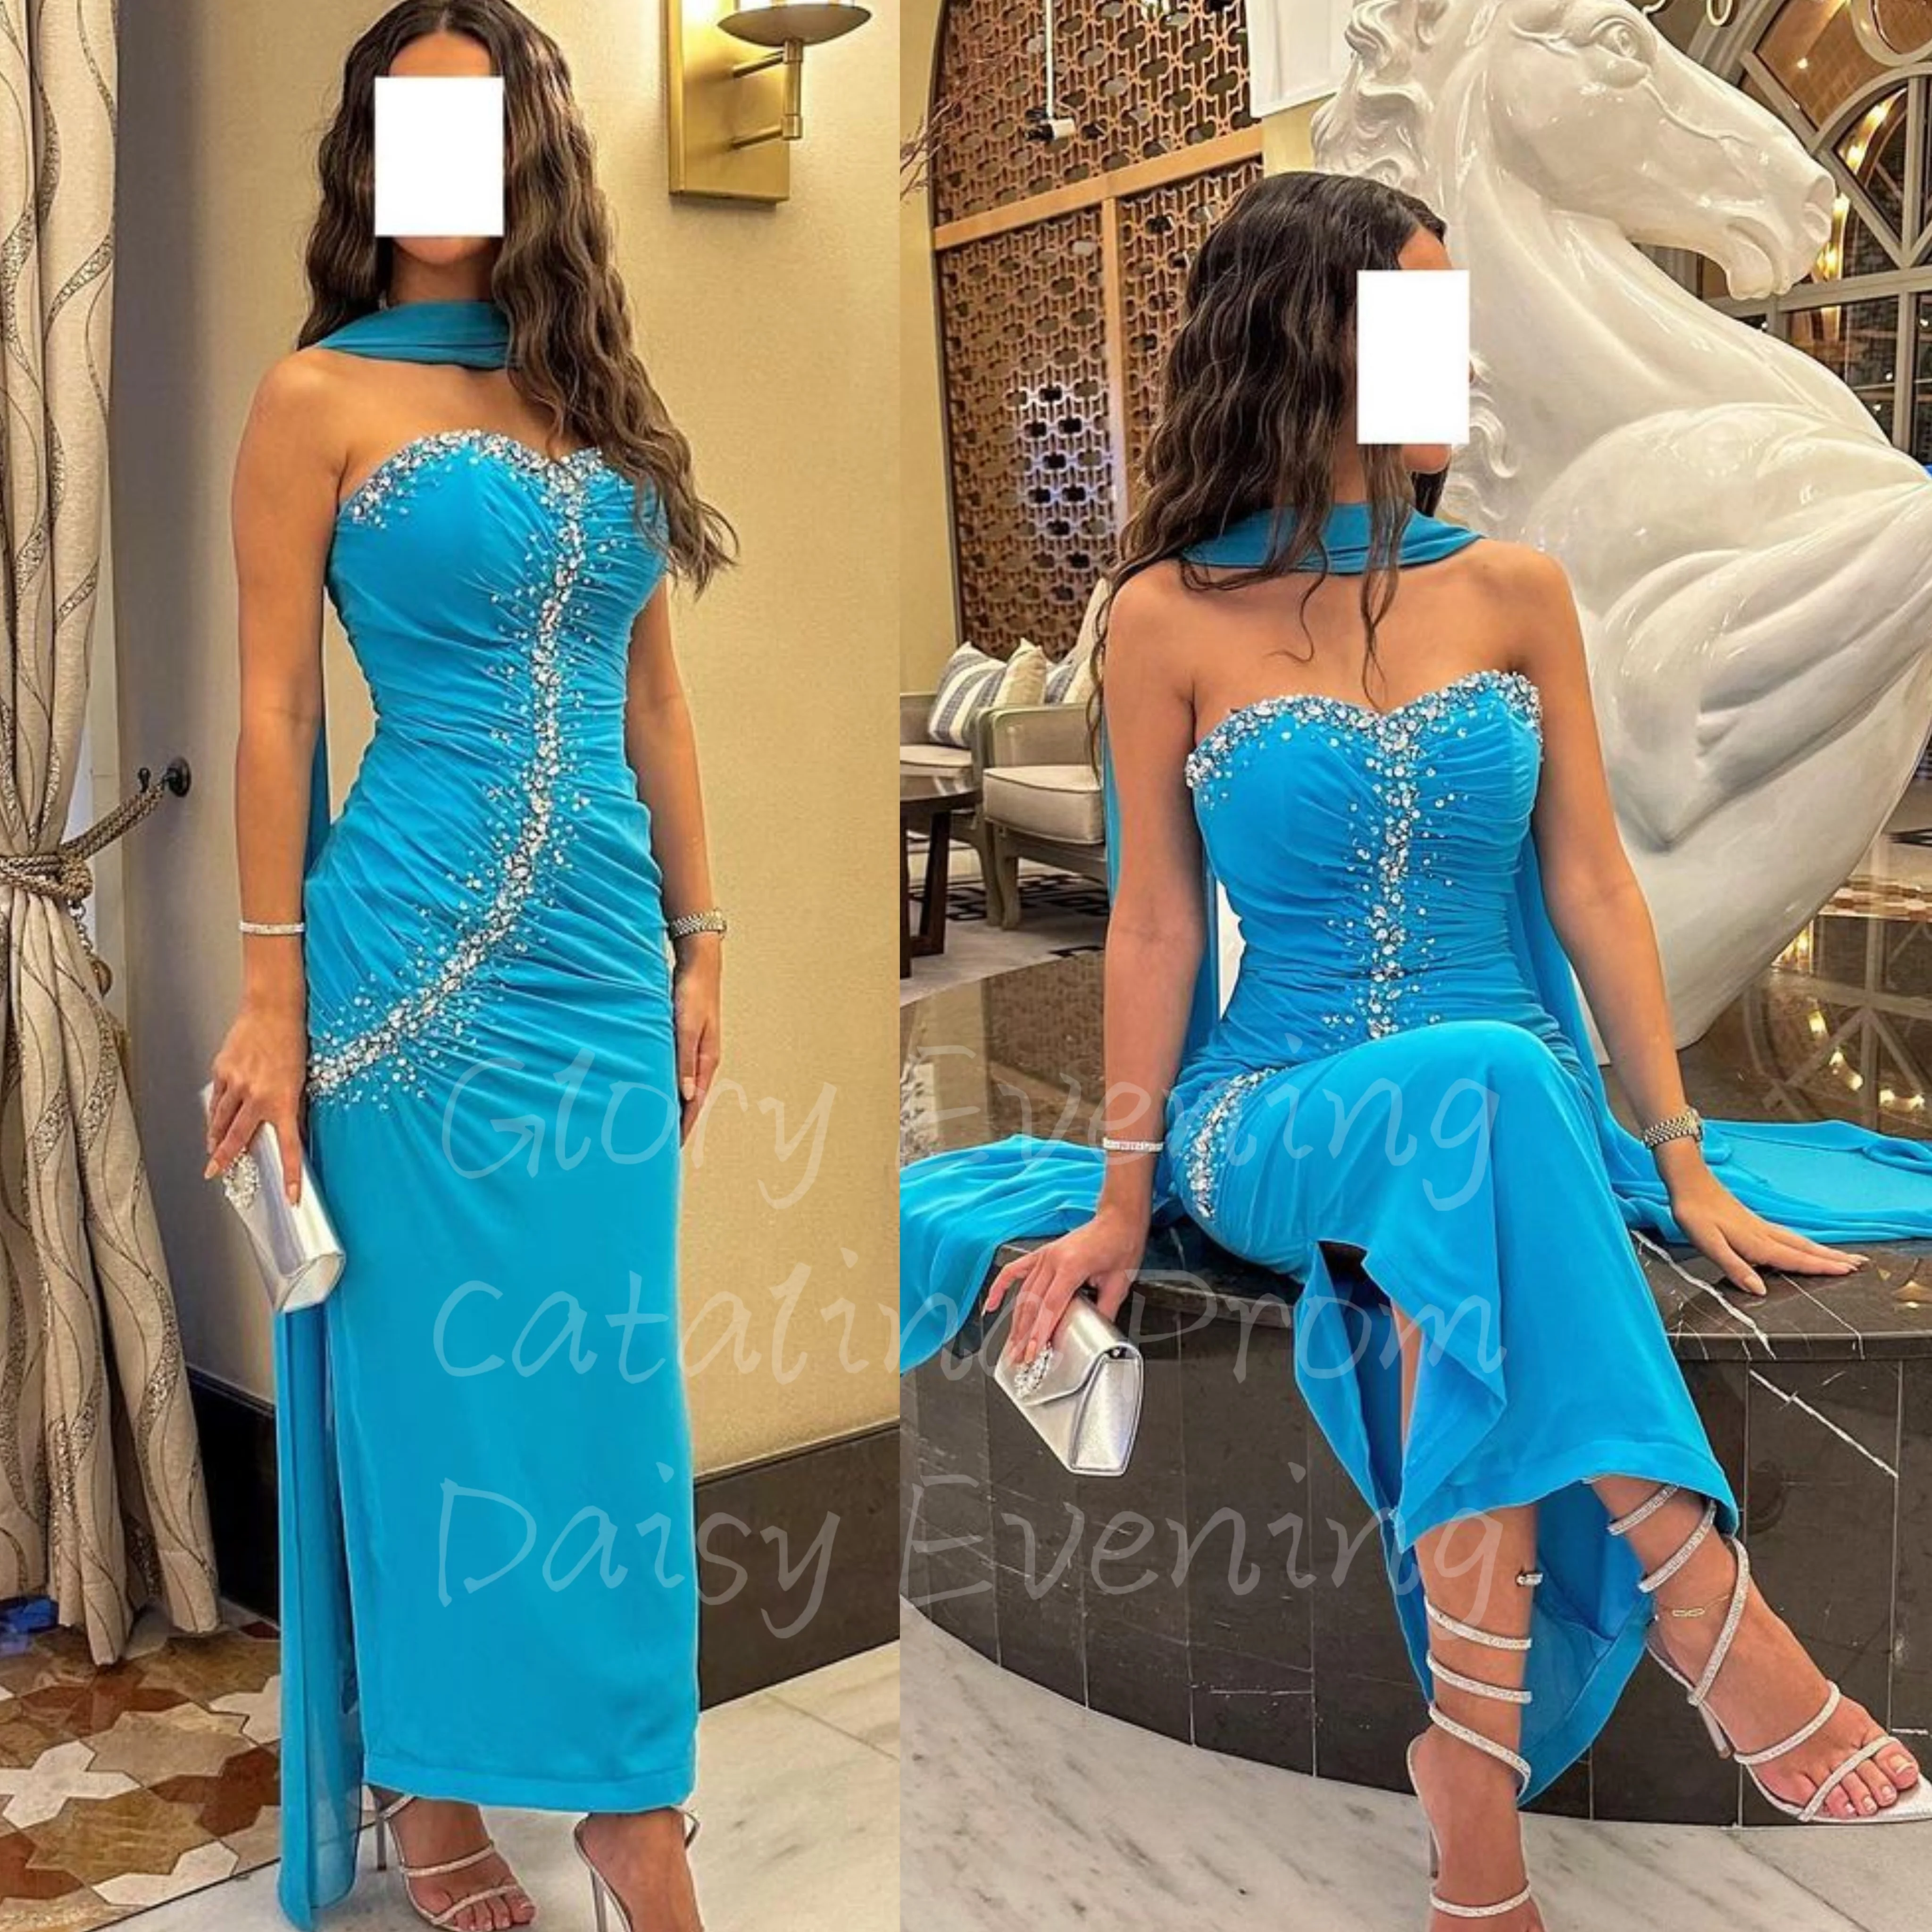 

Sky Blue Evening Dress For Women Party Sweetheart Prom Dresses gala Floor Length Beading Sleeveless Saudi Arabia Women's Formal